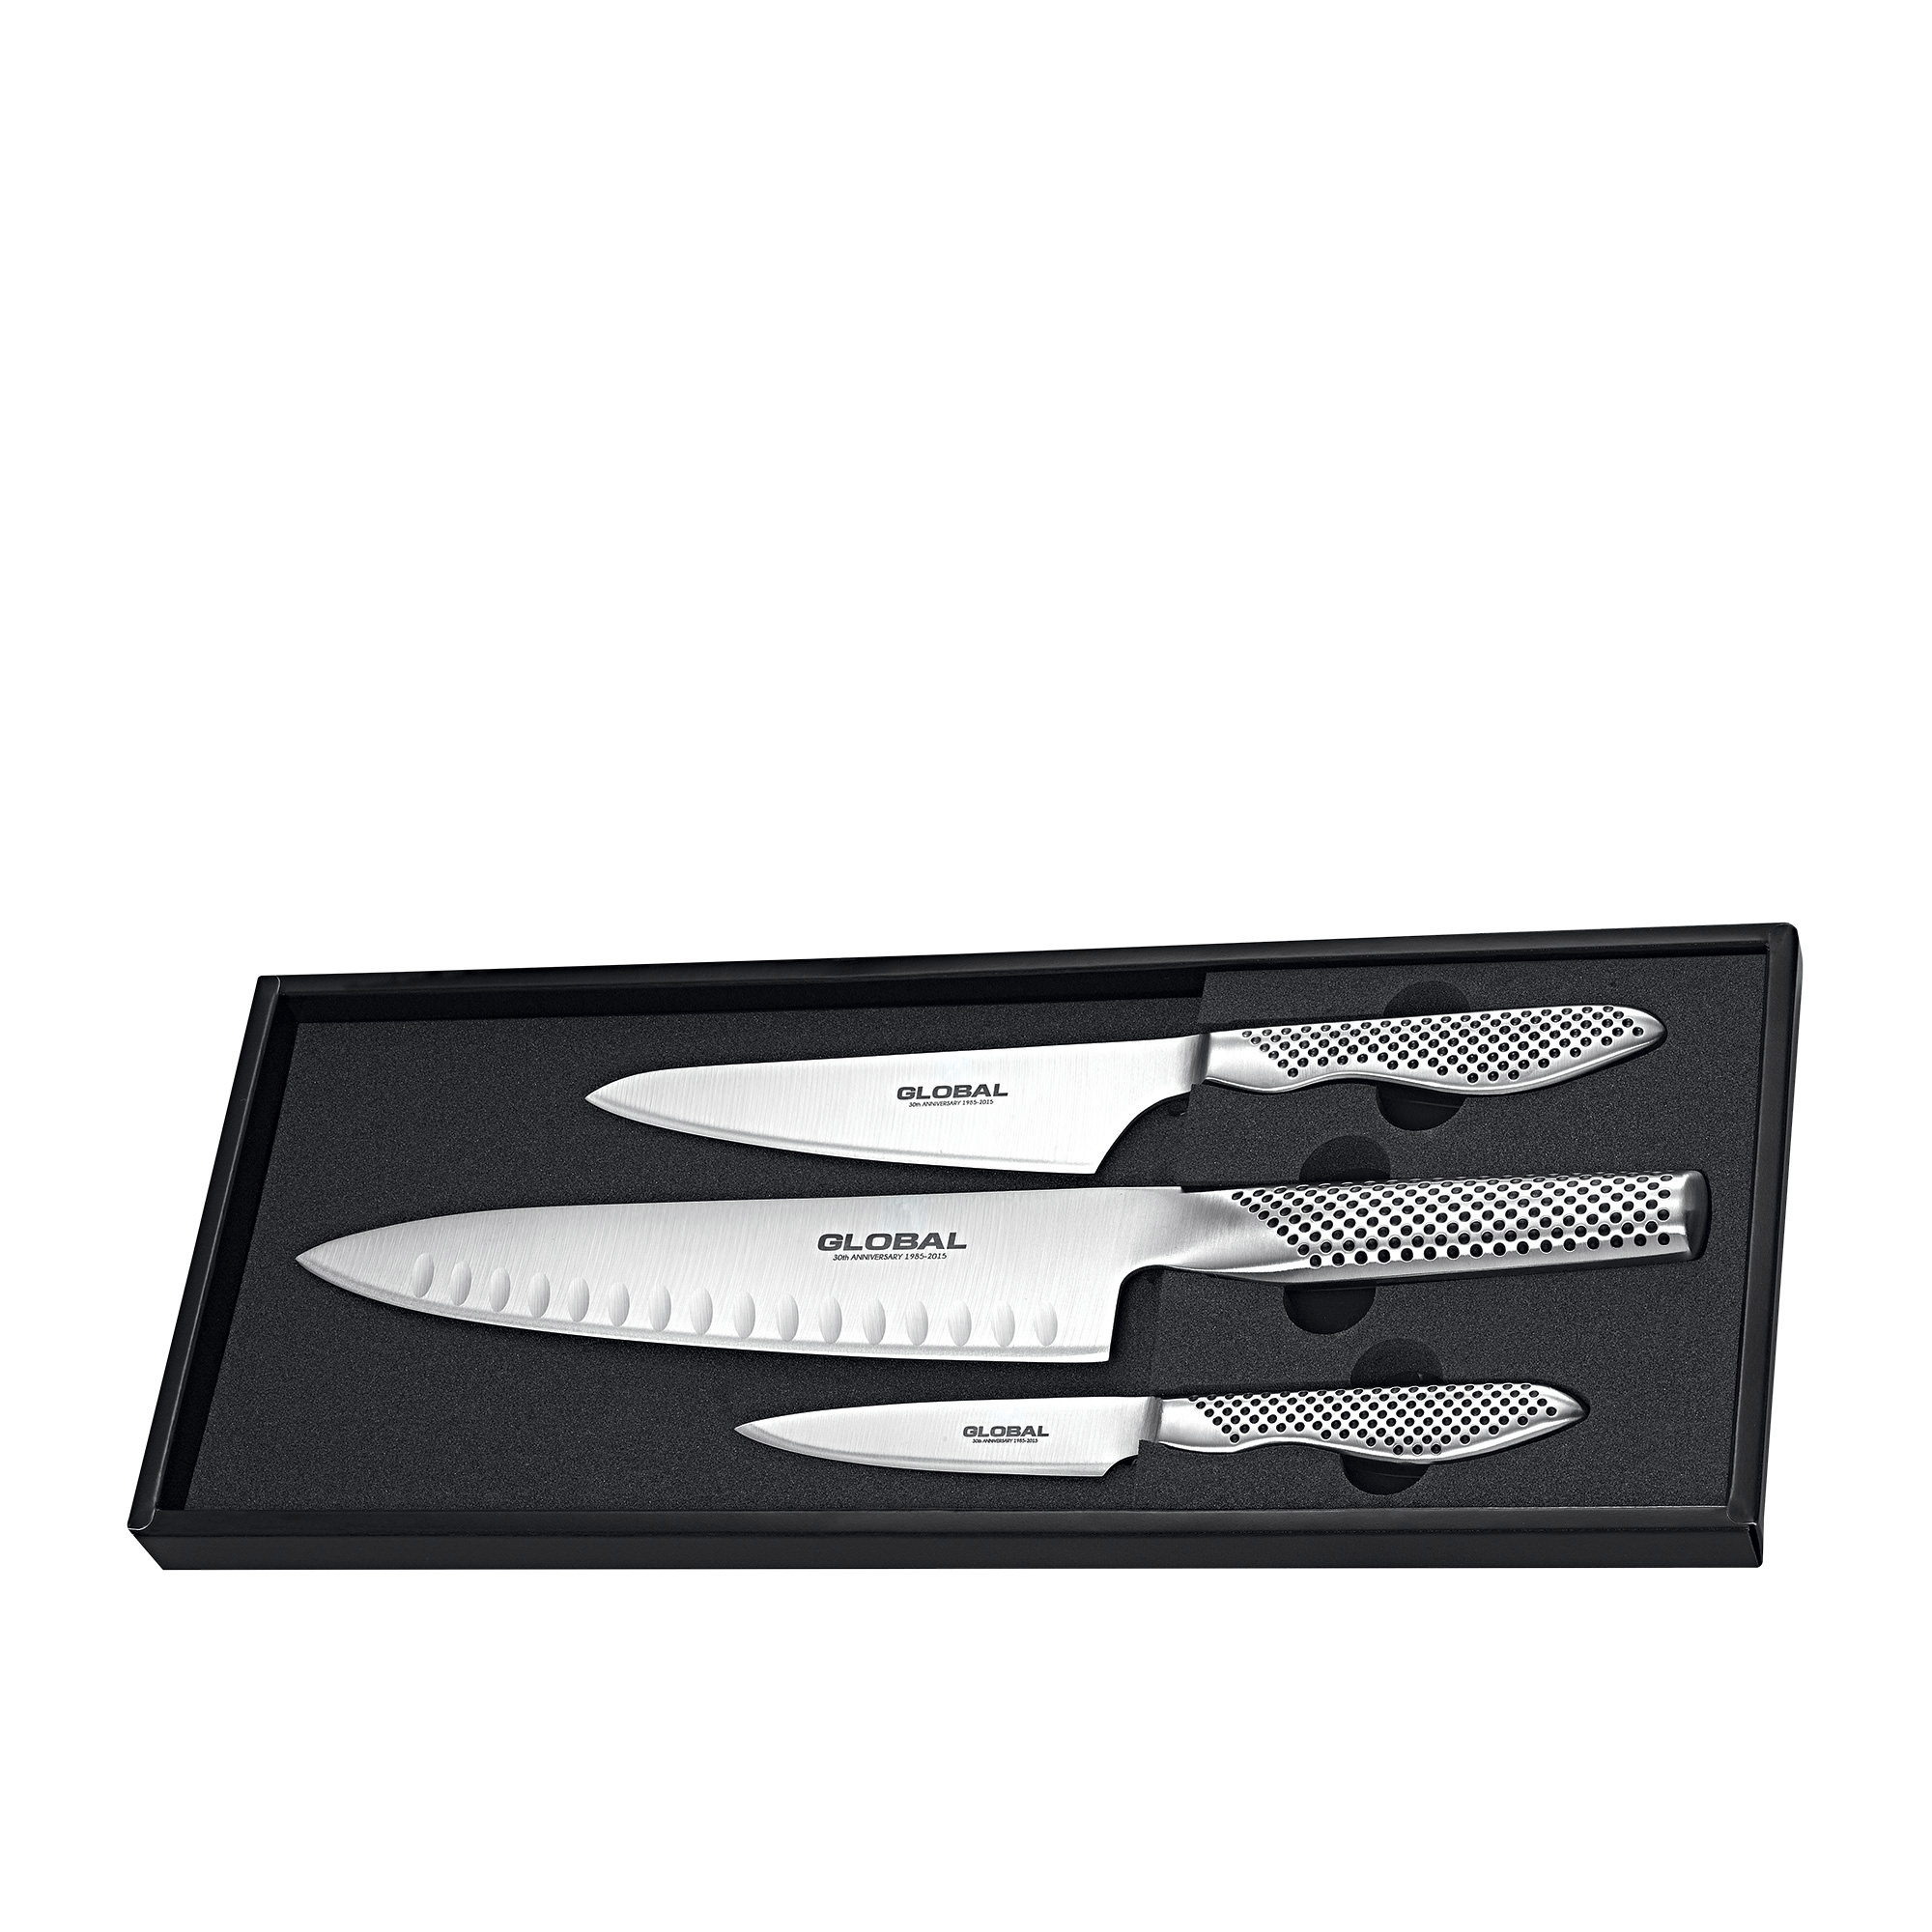 Global 3pc Knife Set Image 2